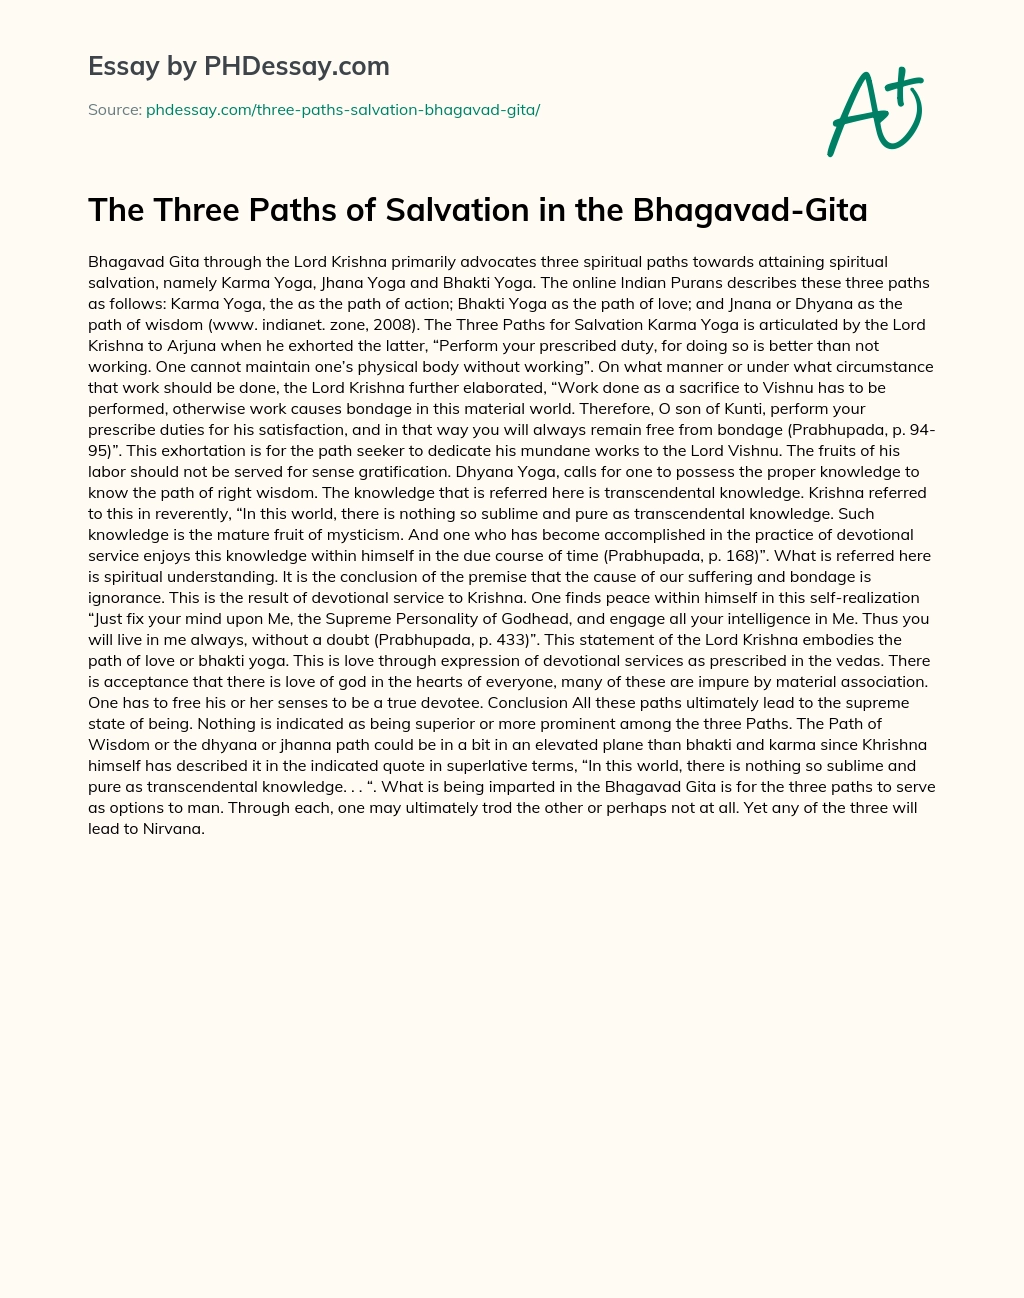 The Three Paths of Salvation in the Bhagavad-Gita essay